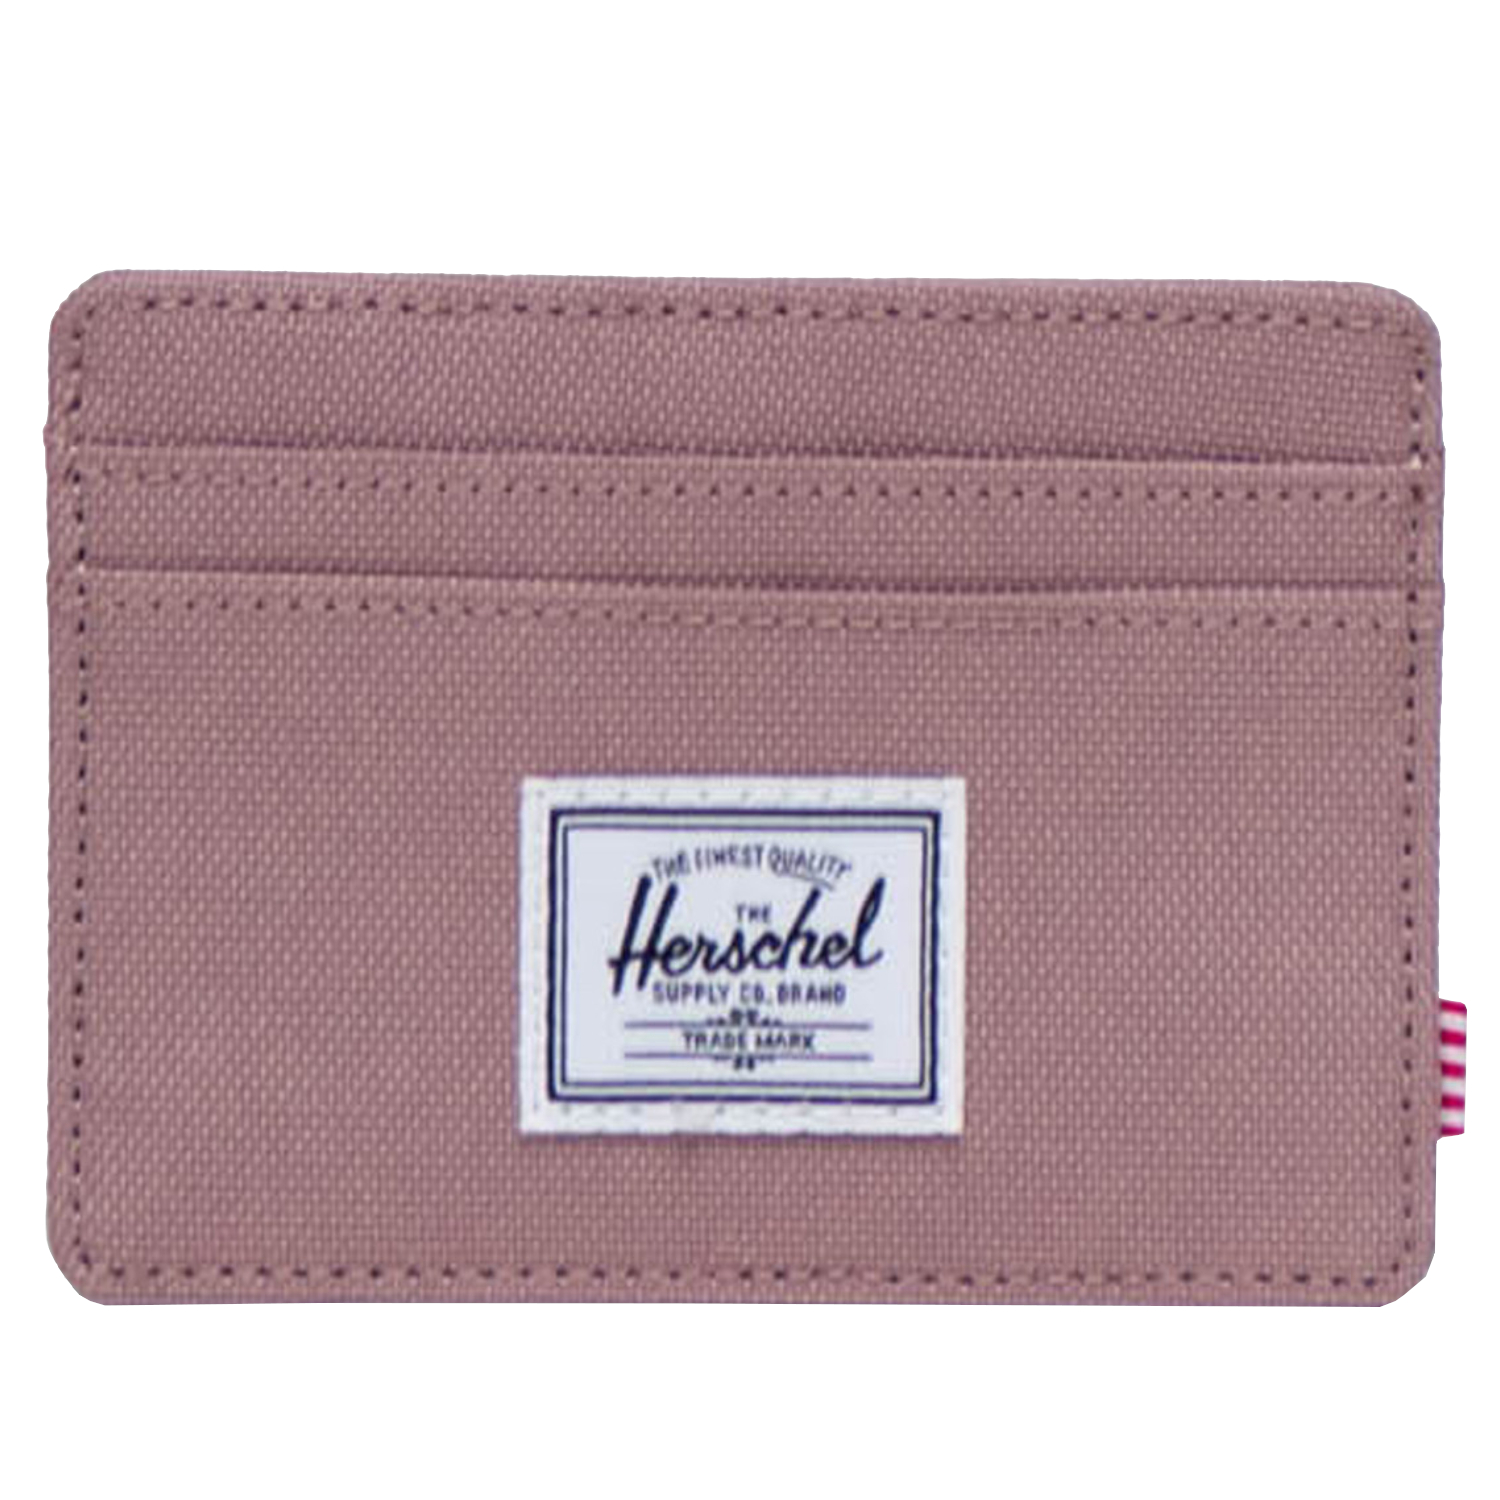 Кошелек Herschel Herschel Cardholder Wallet, розовый